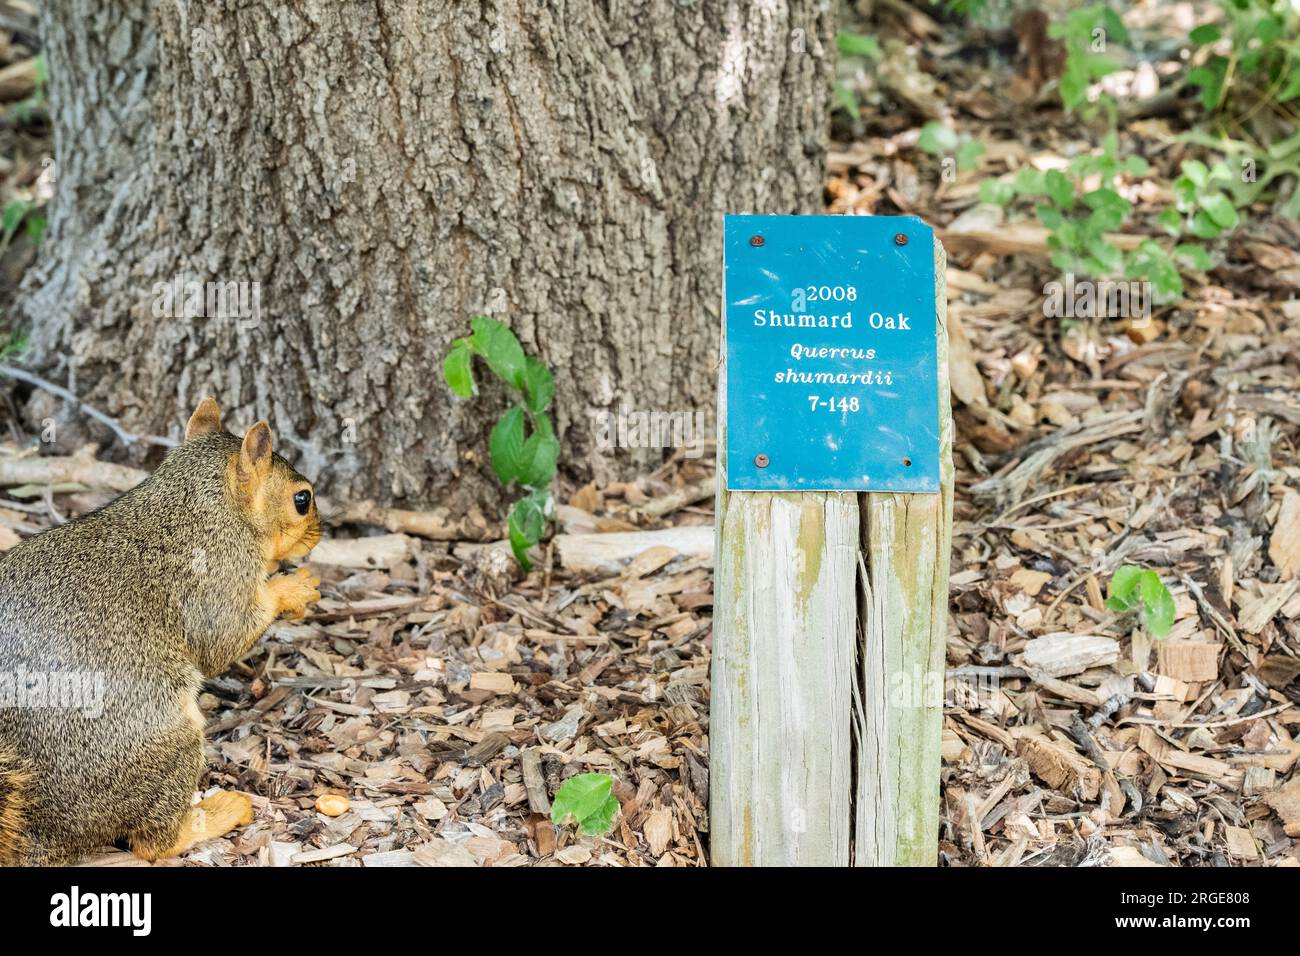 A fox squirrel, Sciurus niger, sits beside a placard identifying a Shumard Oak tree, Quercus shumardii in Sedgwick county nature park, Wichita, KS, USA Stock Photo